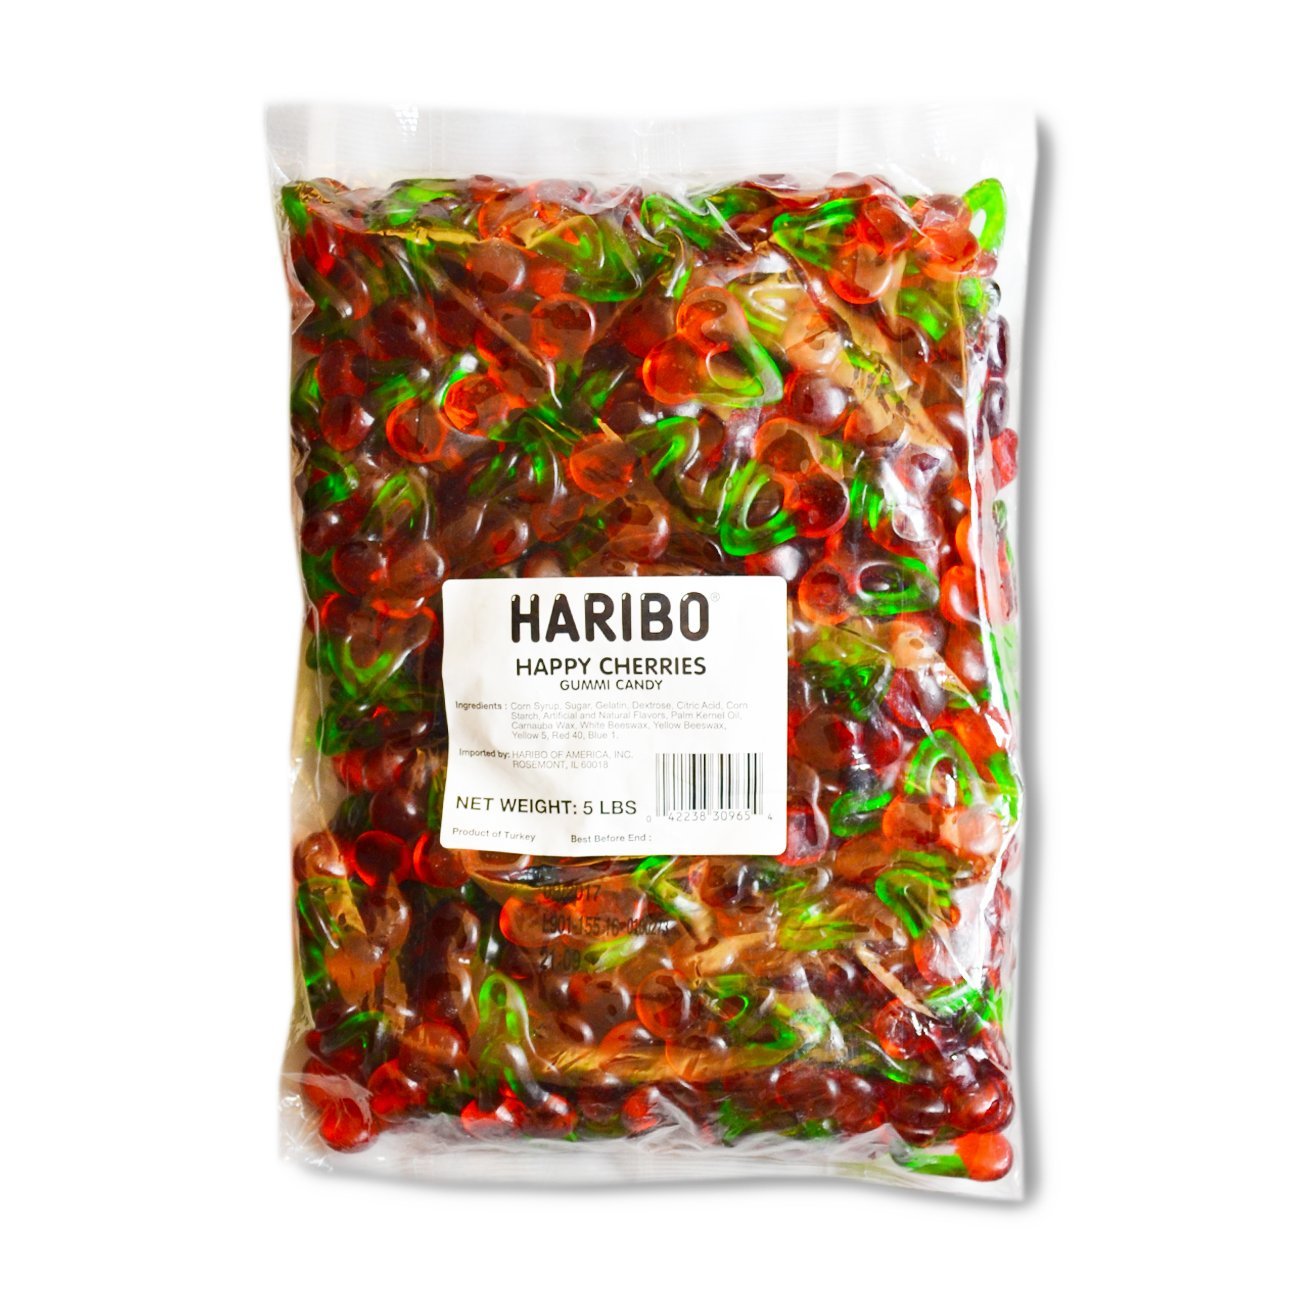 Haribo Gummi Candy Happy Cherries, 5-Pound Bag – $7.09!